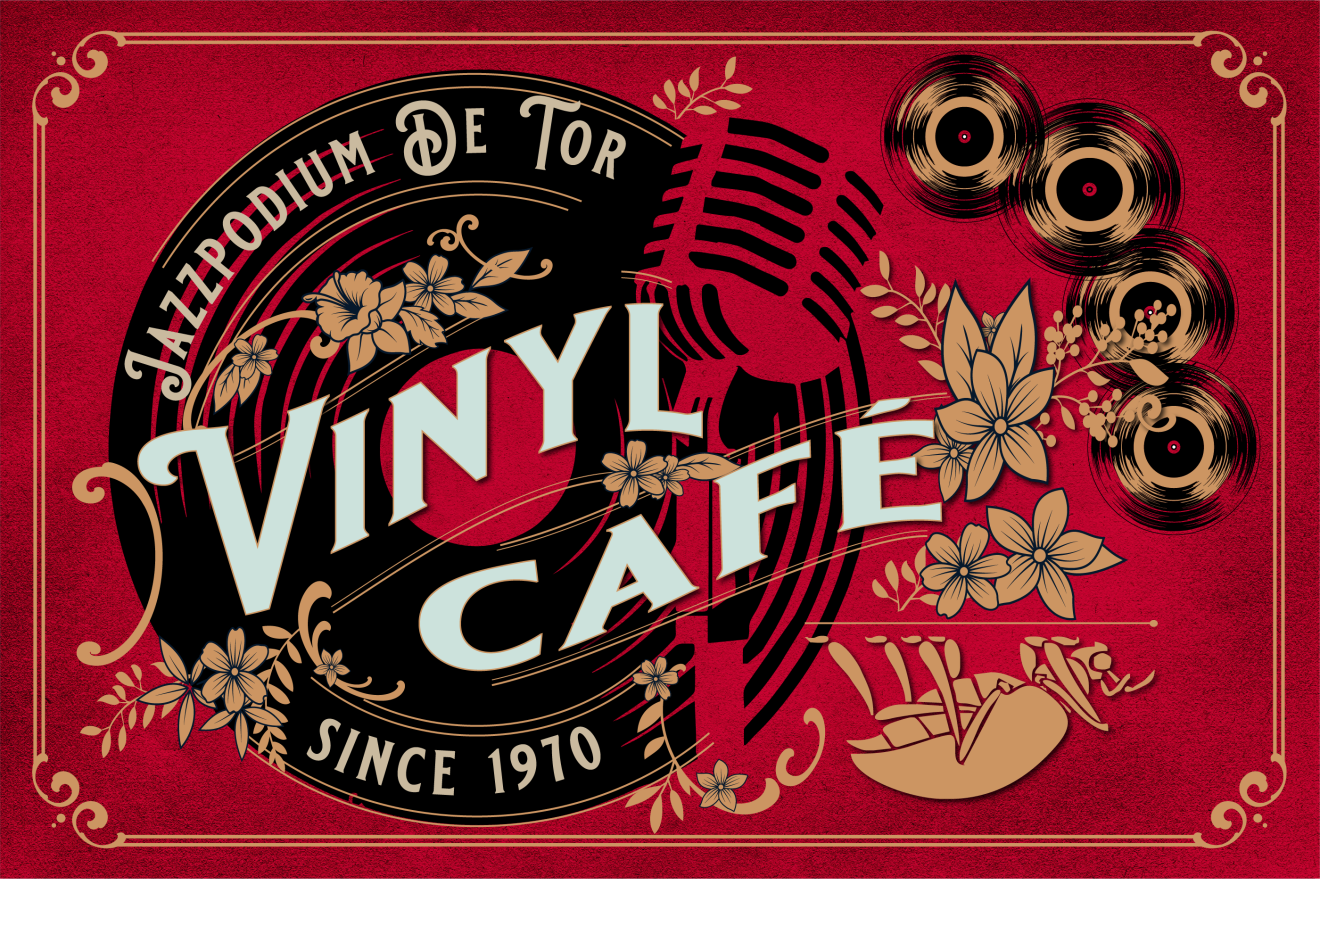 TOR Vinyl Café: mooie verhalen, verrassende muziek